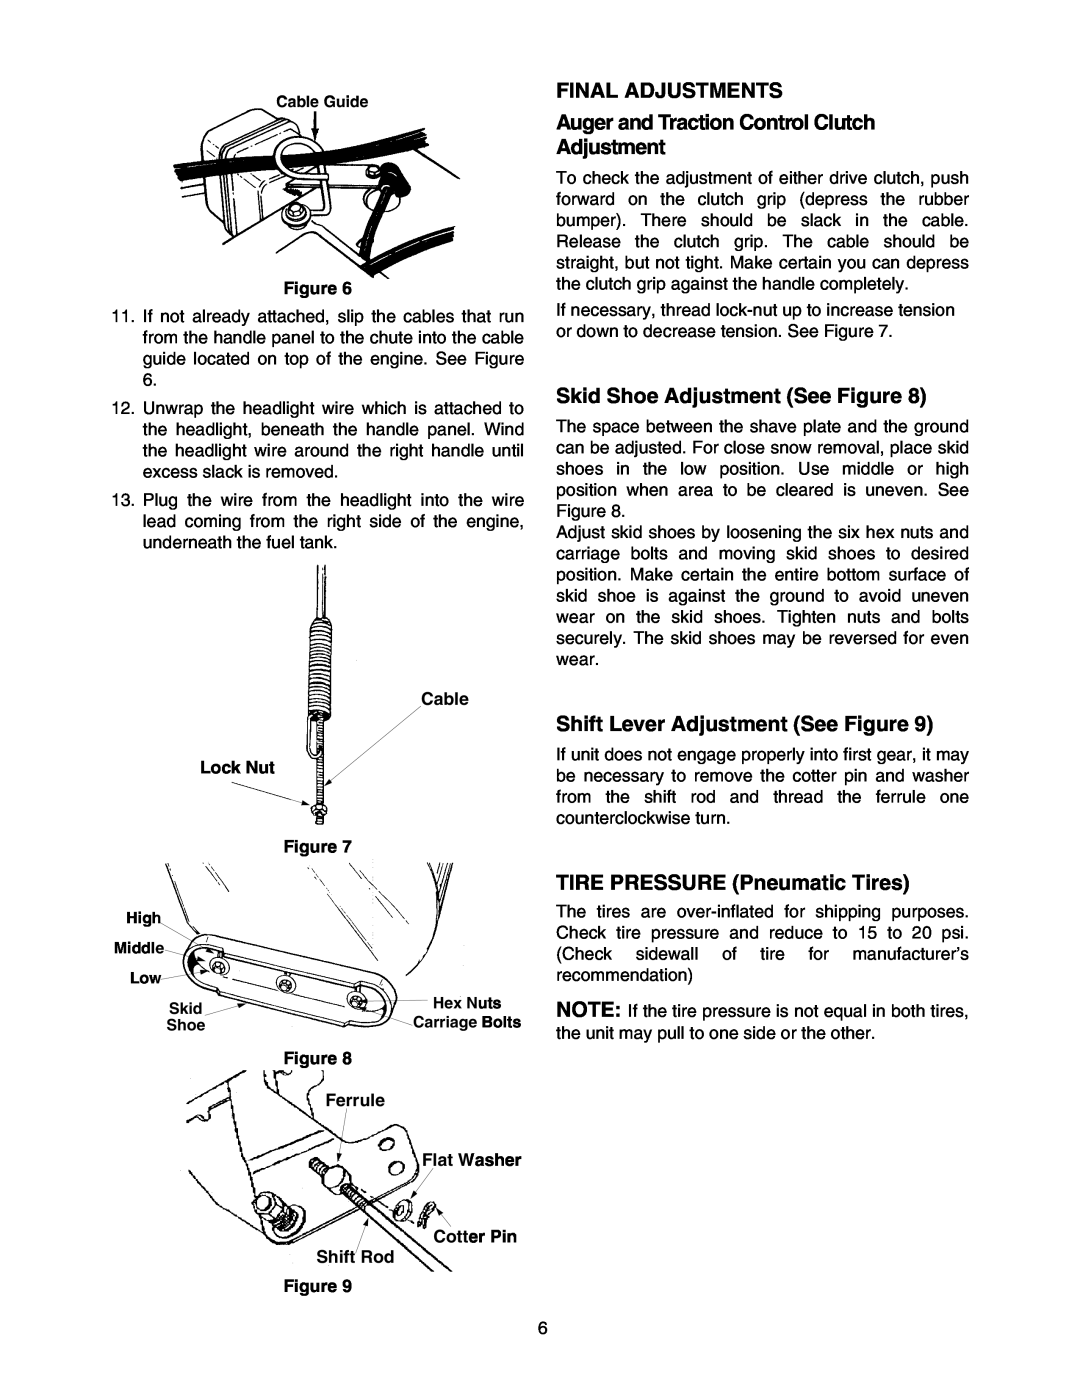 MTD 993 manual Final Adjustments, Auger and Traction Control Clutch Adjustment, Skid Shoe Adjustment See Figure 